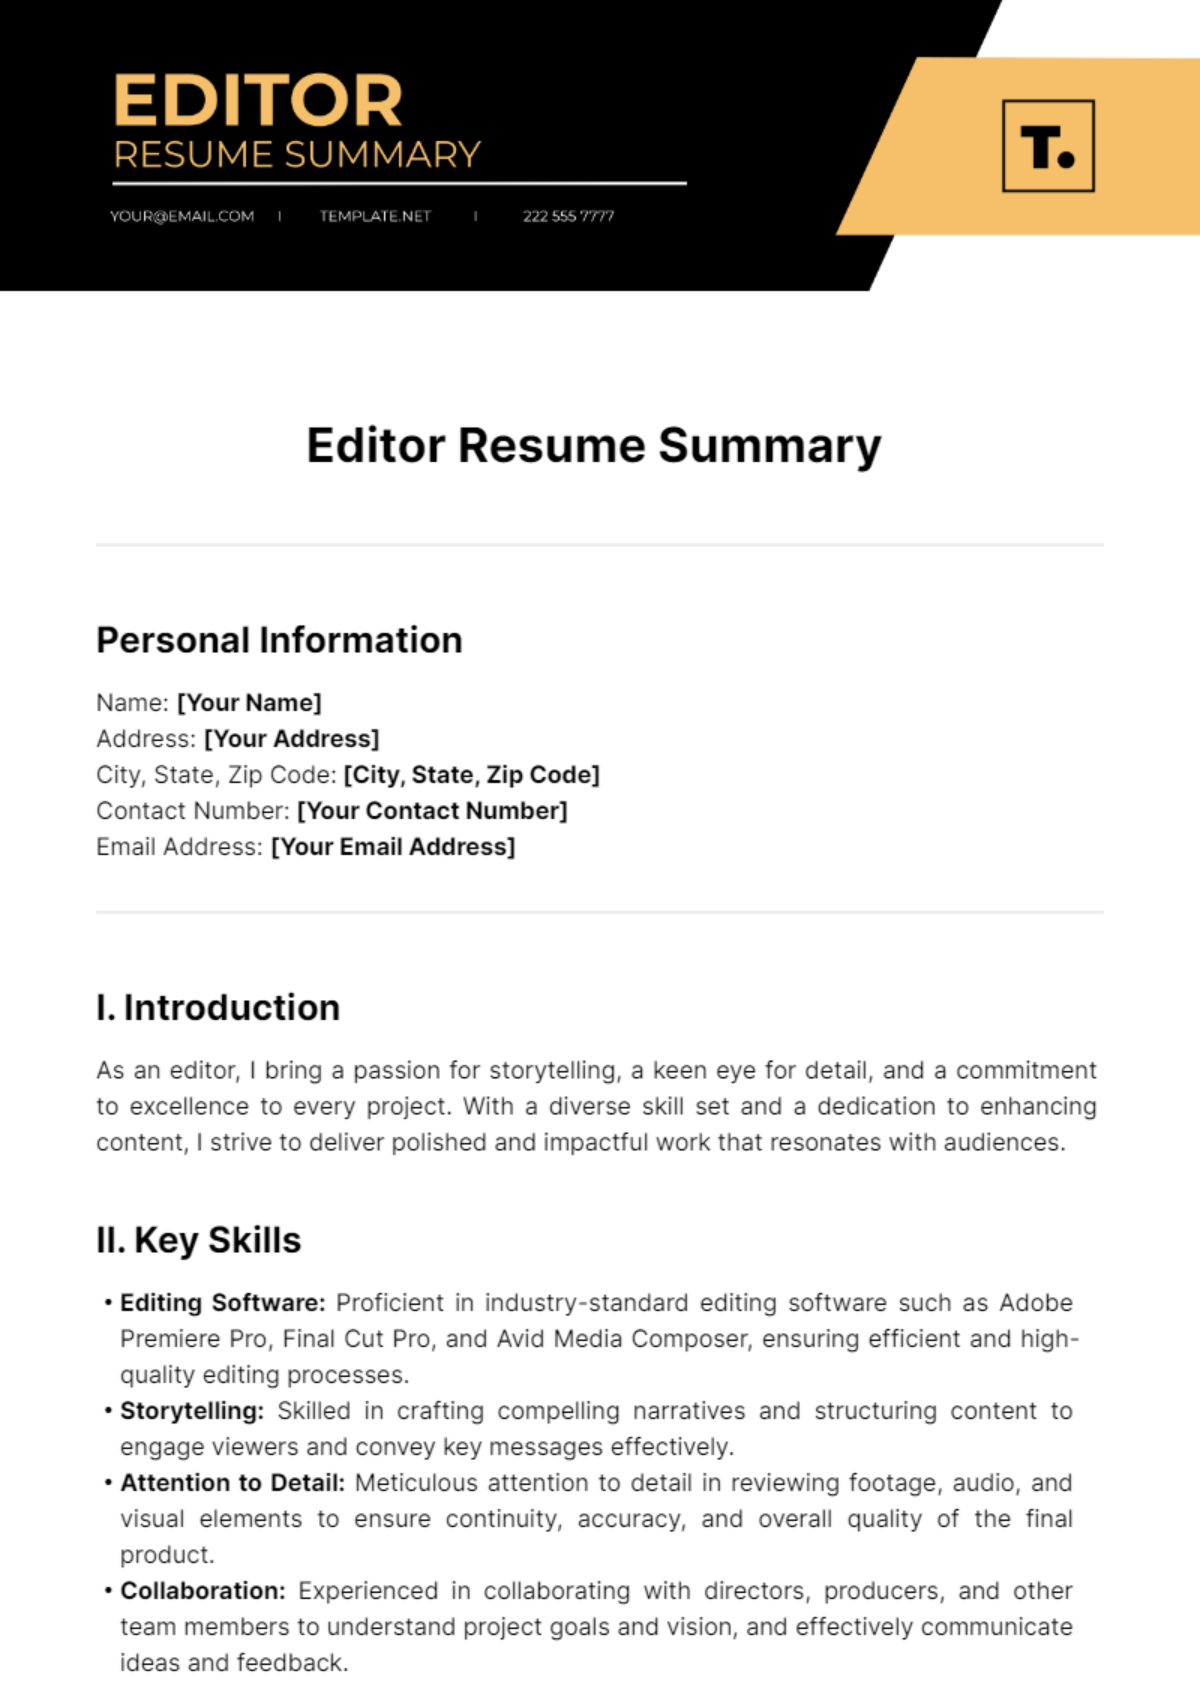 Free Editor Resume Summary Template